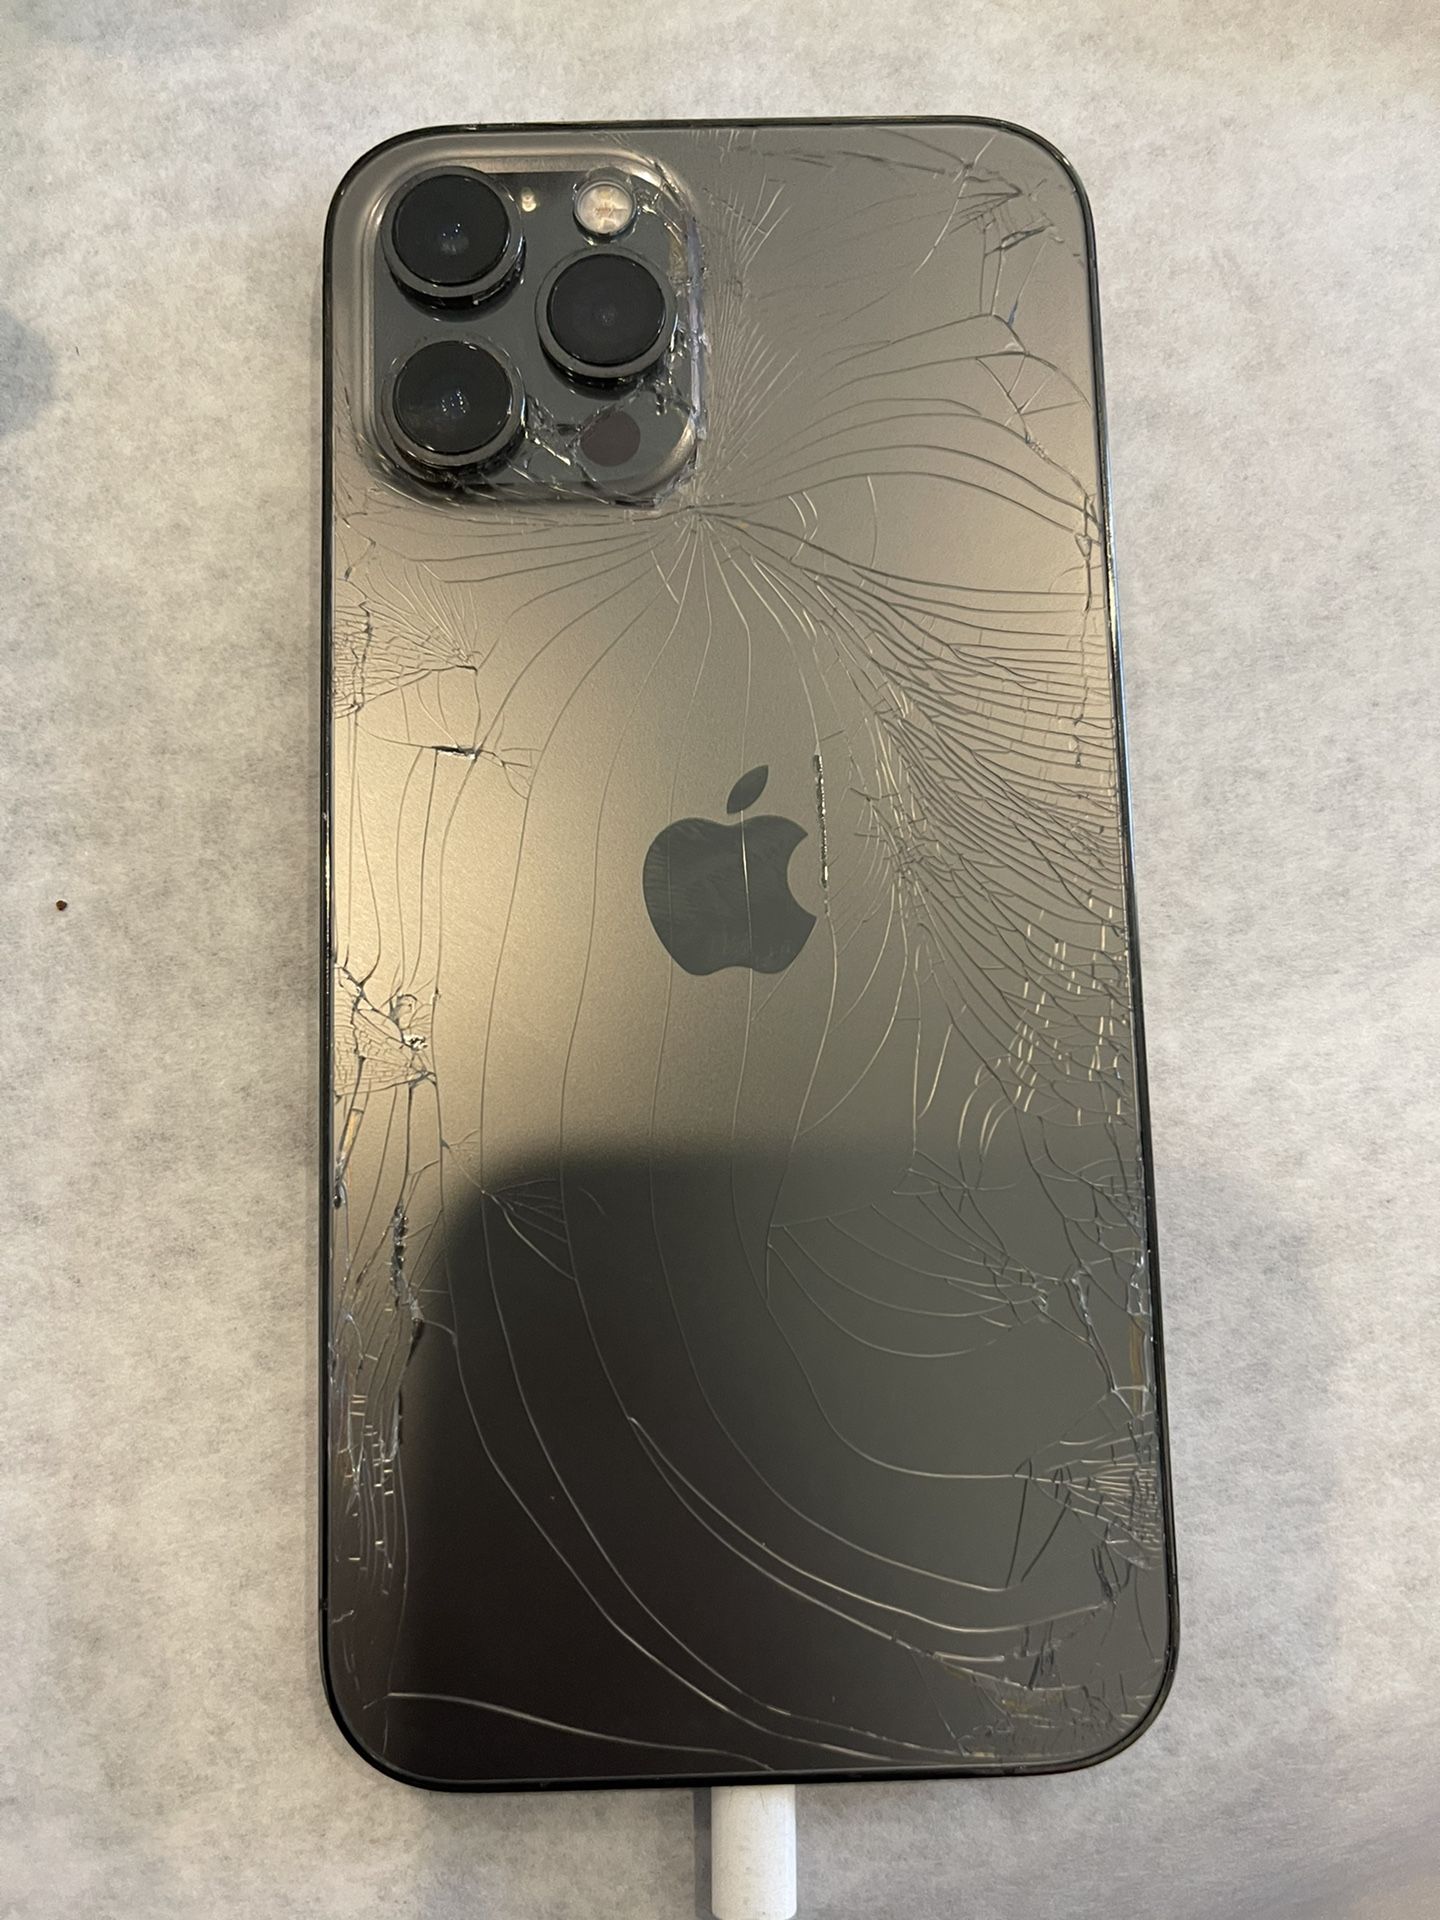 Factory Unlocked iPhone 12 Pro Max $700